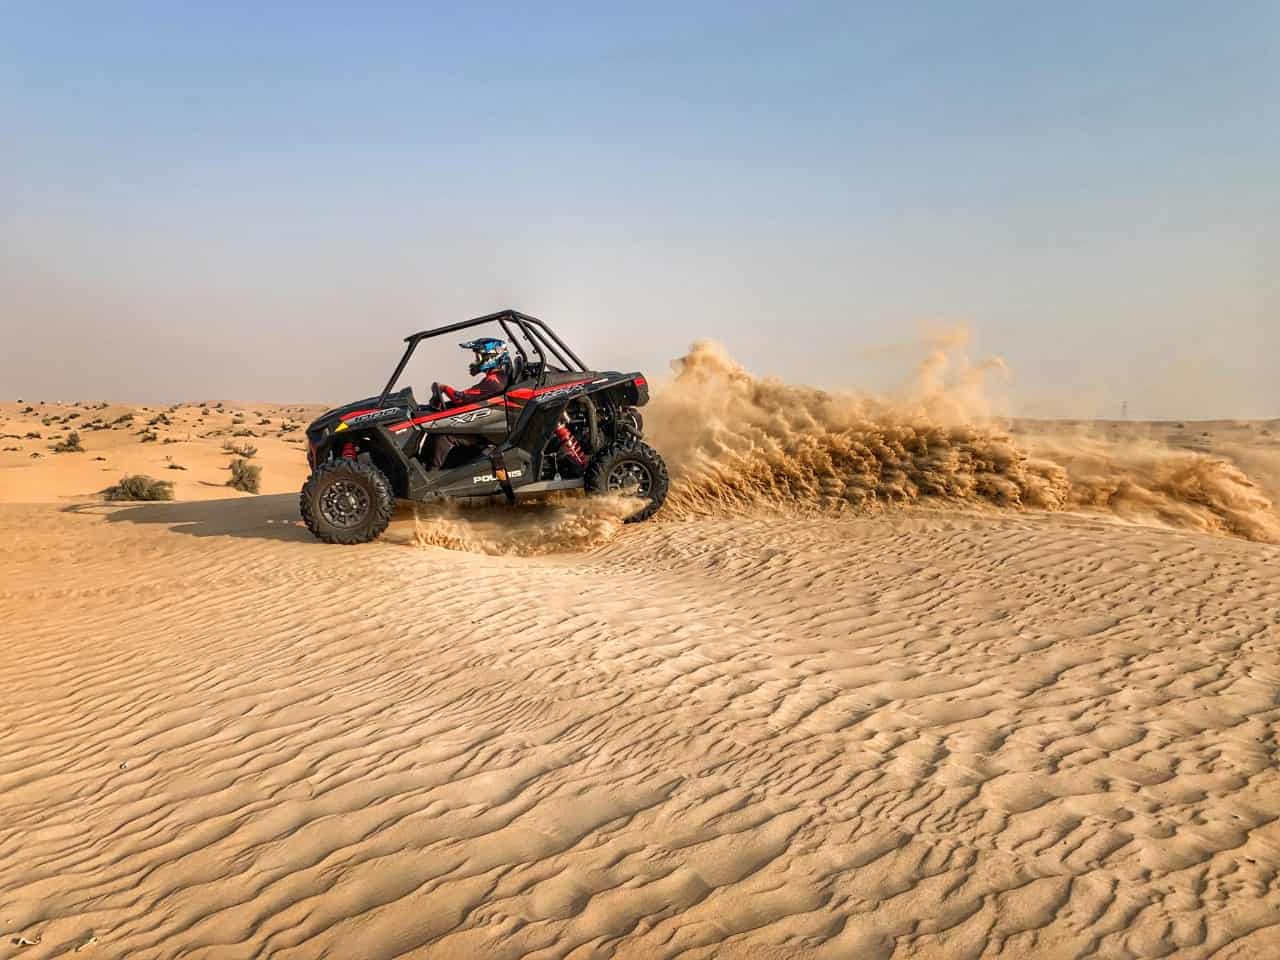 Desert Locations in Dubai for Dune Buggy Adventures